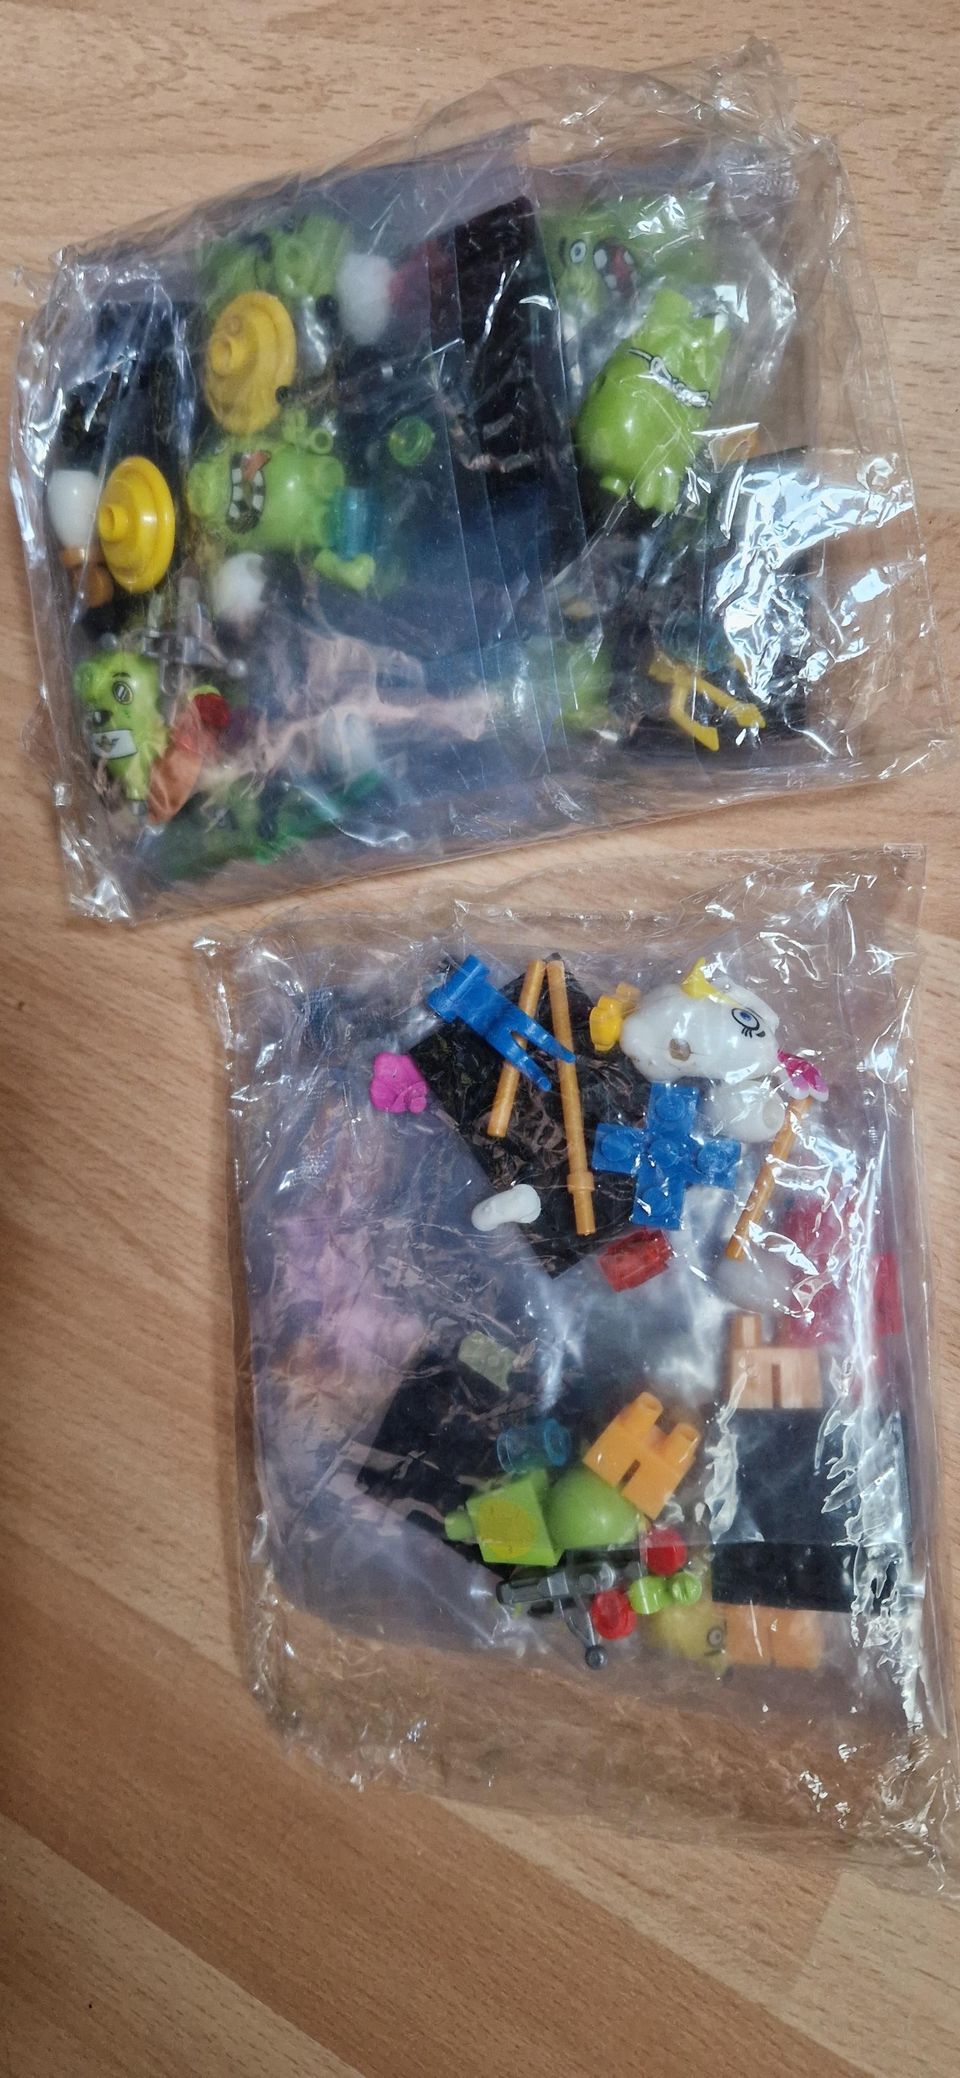 Random Angry Birds plastic toys, NOT Lego